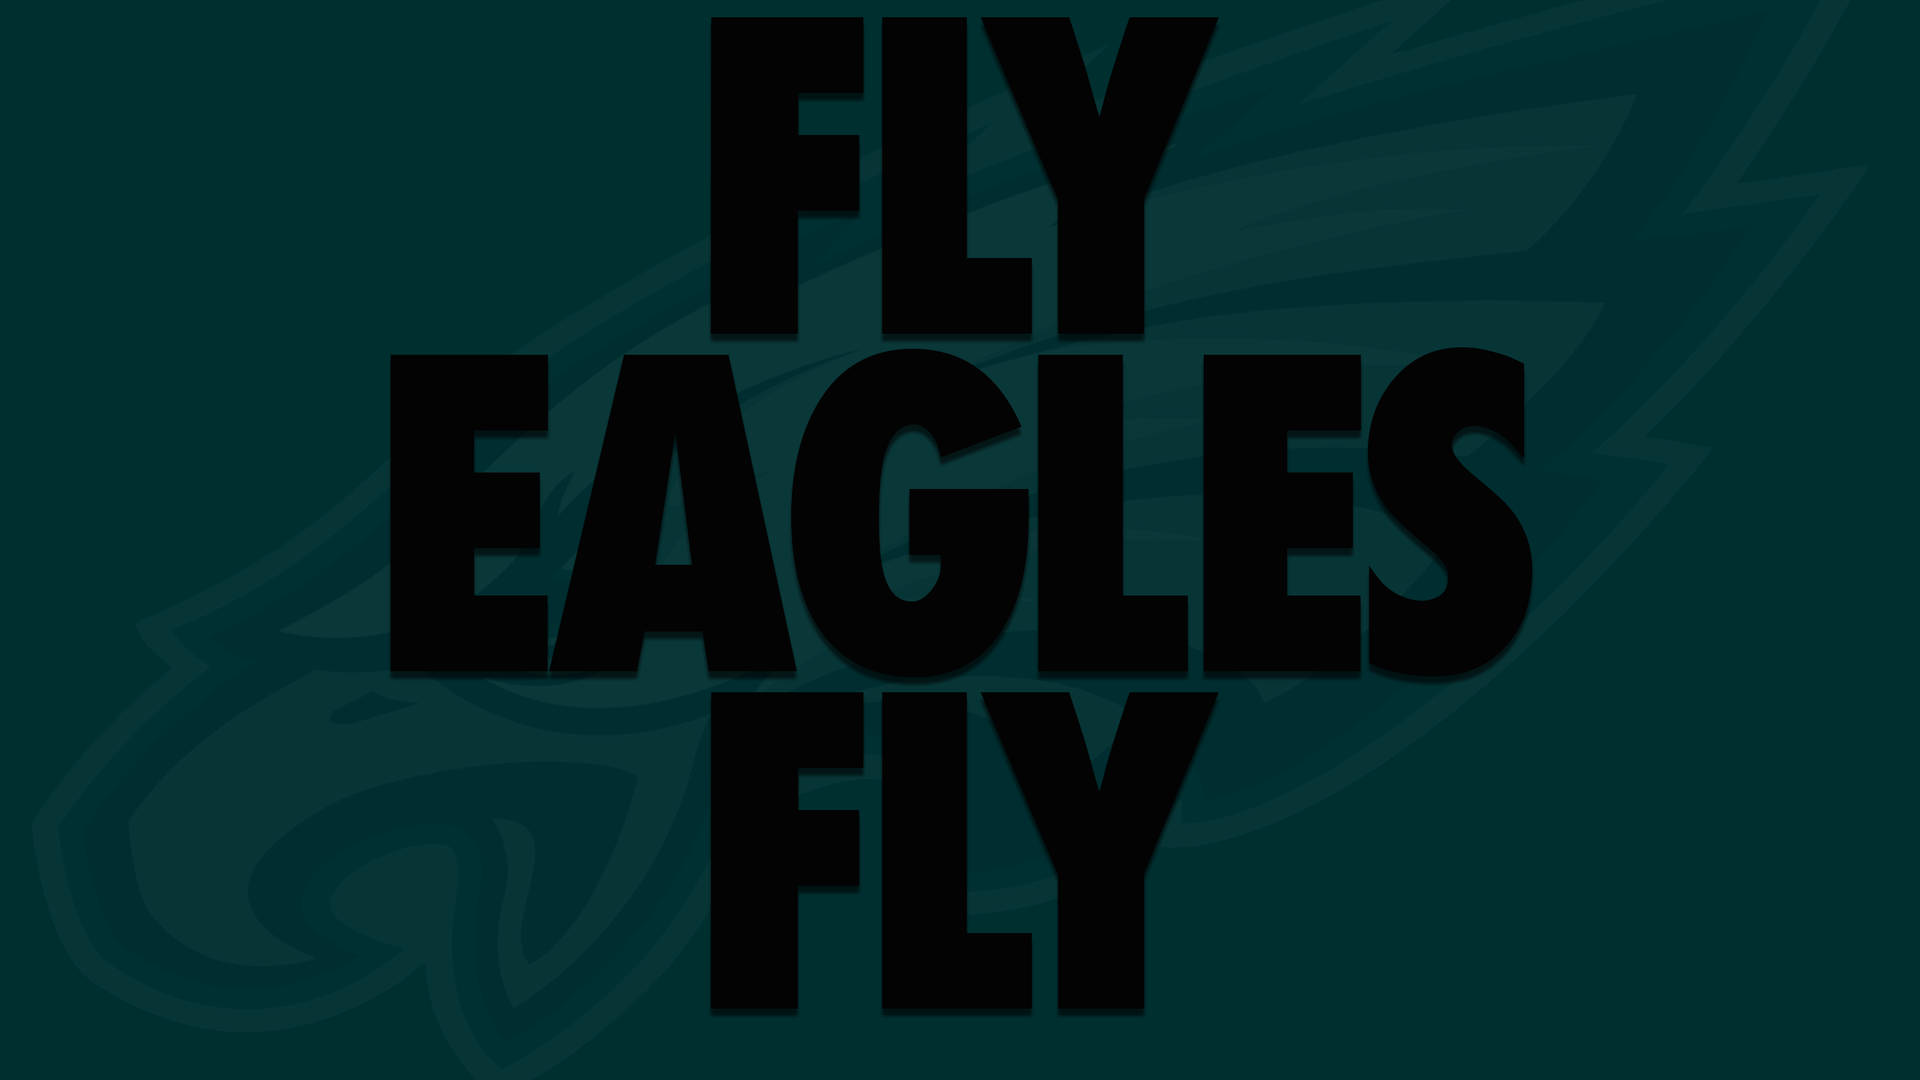 Philadelphia Eagles Tagline Background